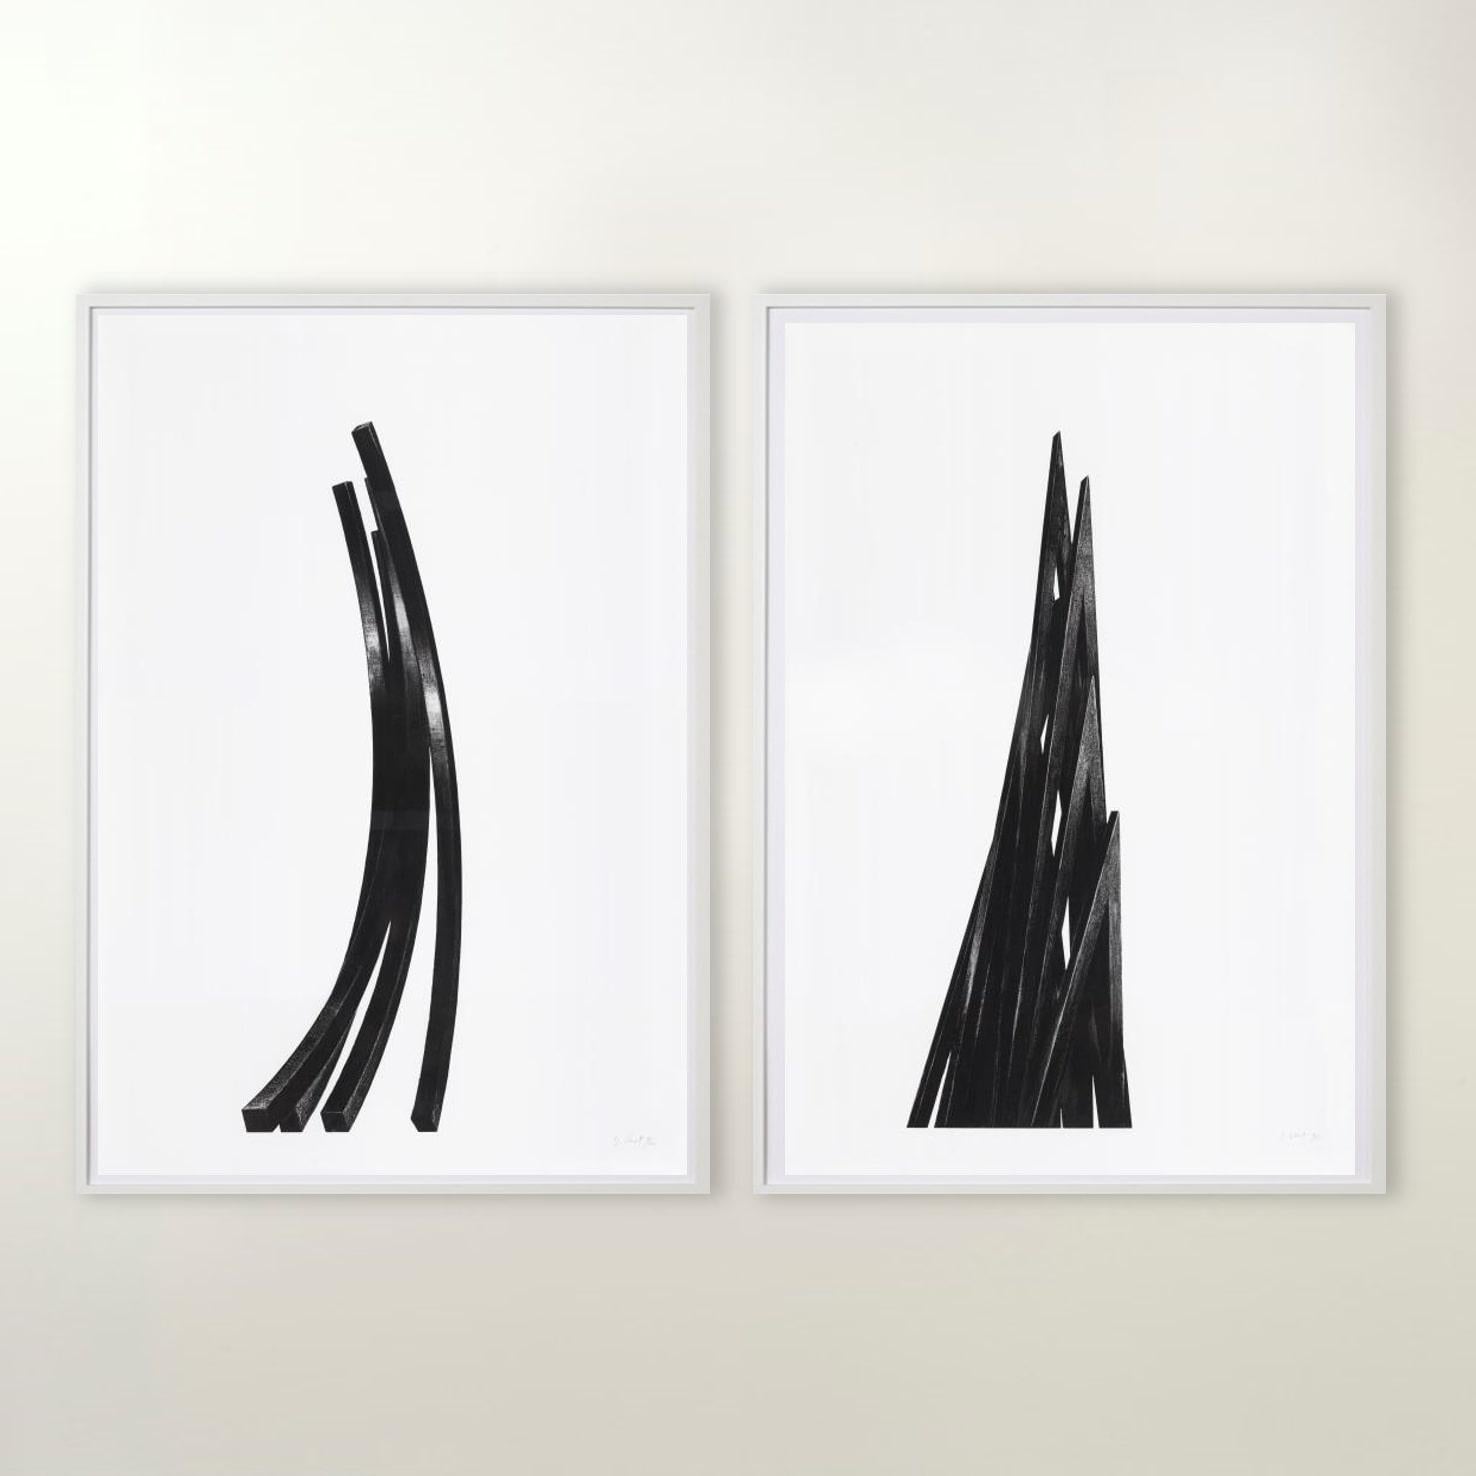 Bernar Venet Figurative Print - Arcs: Uneven Angles - Contemporary, 21st Century, Etching, Black, White, Edition